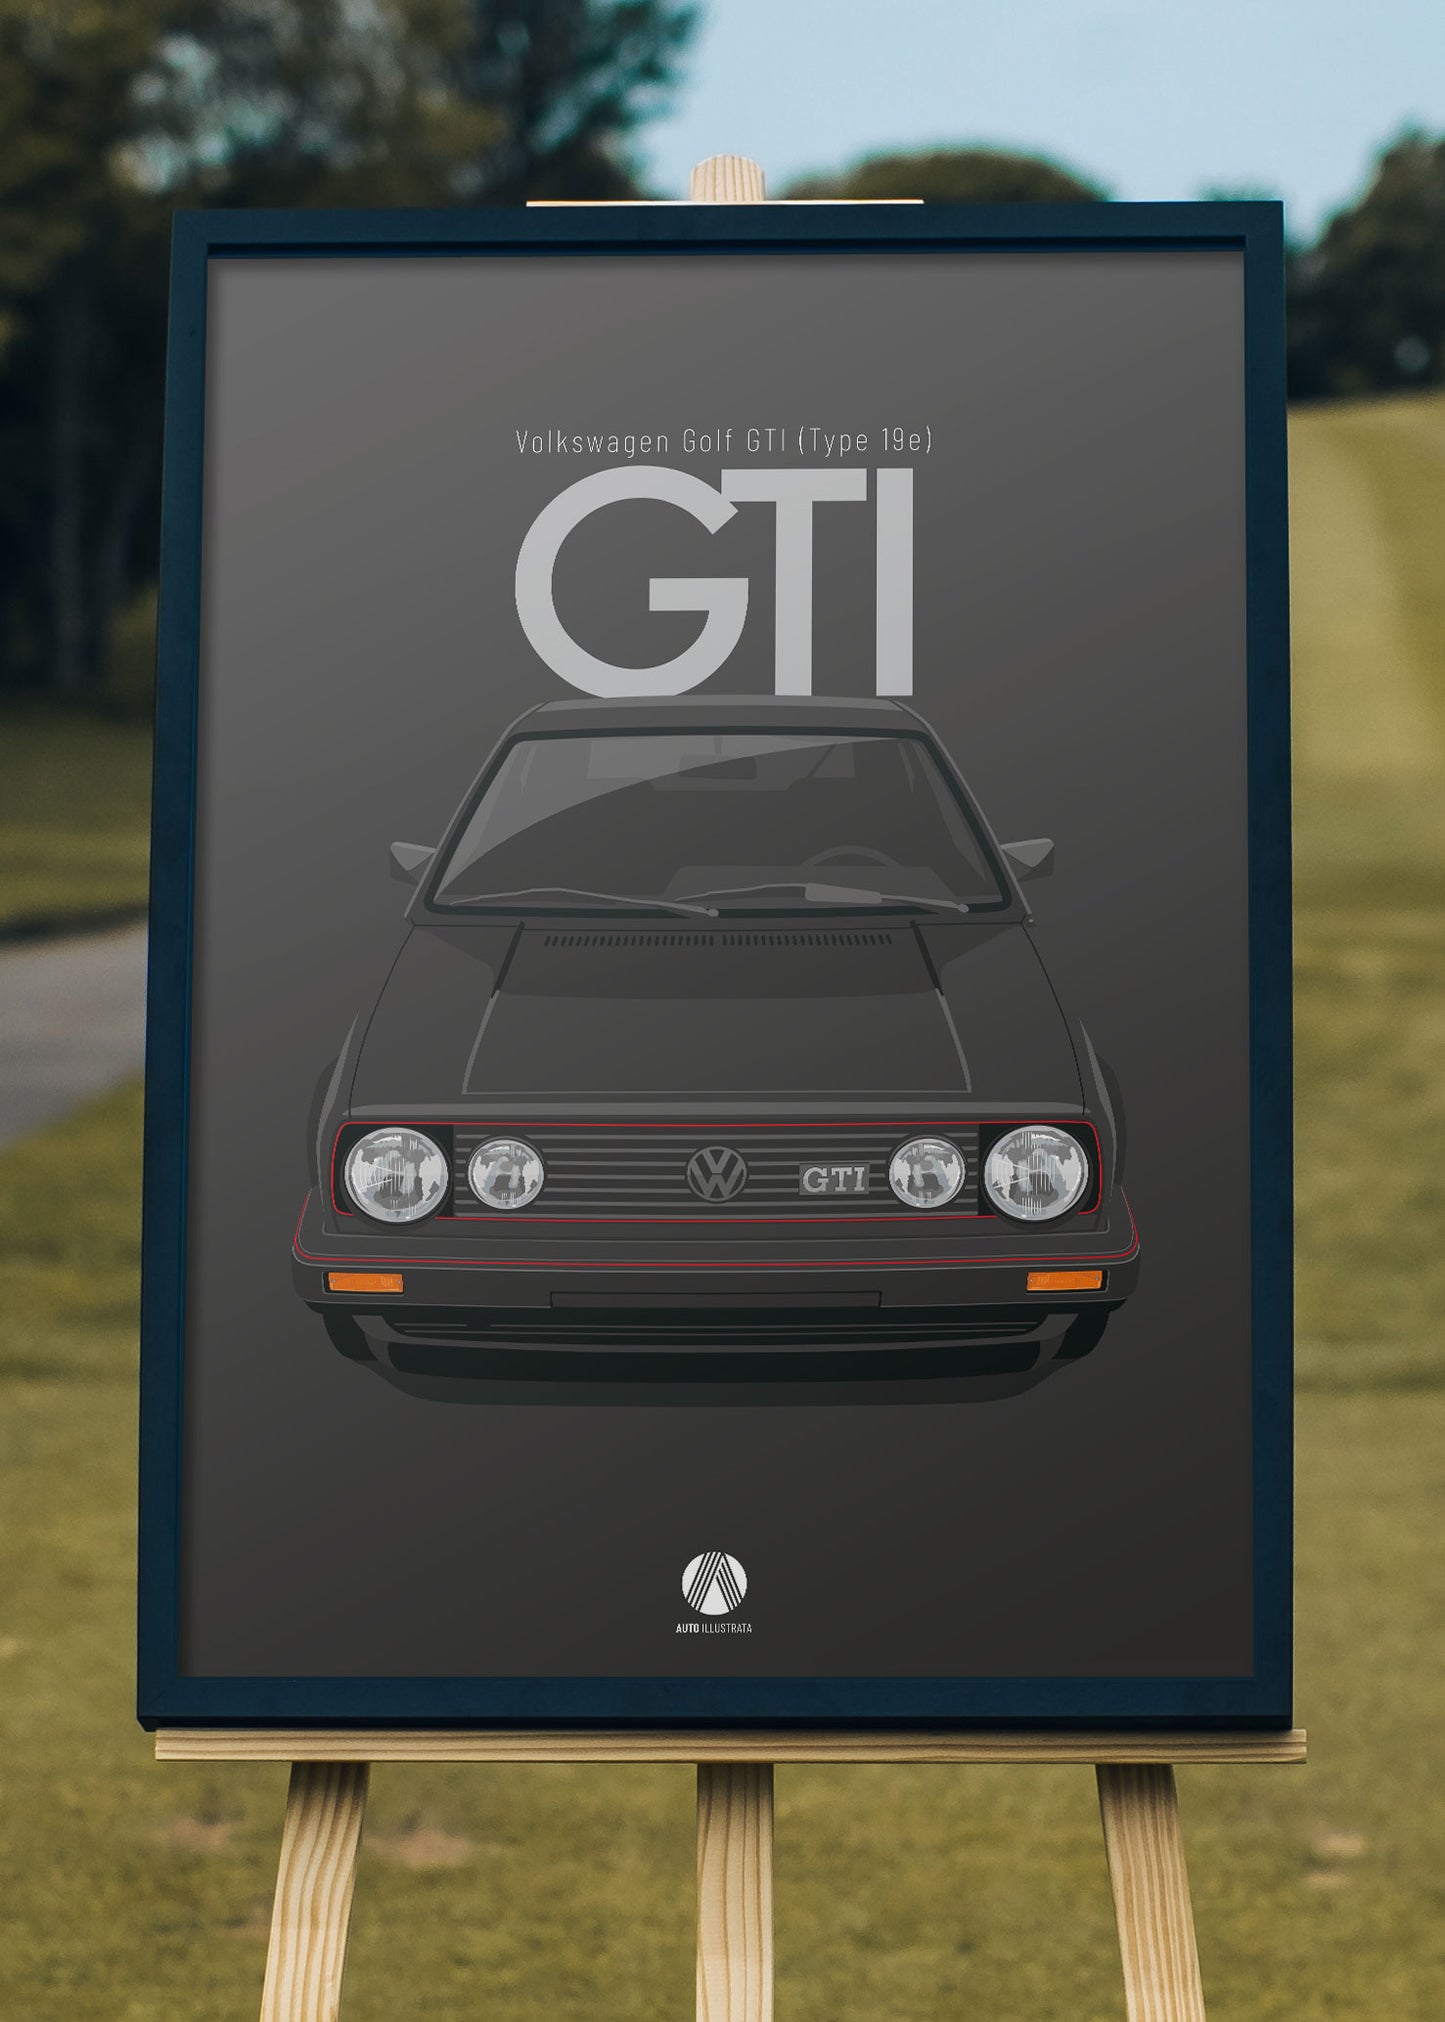 1984 Volkswagen Golf GTI (Mk2) - Black - poster print